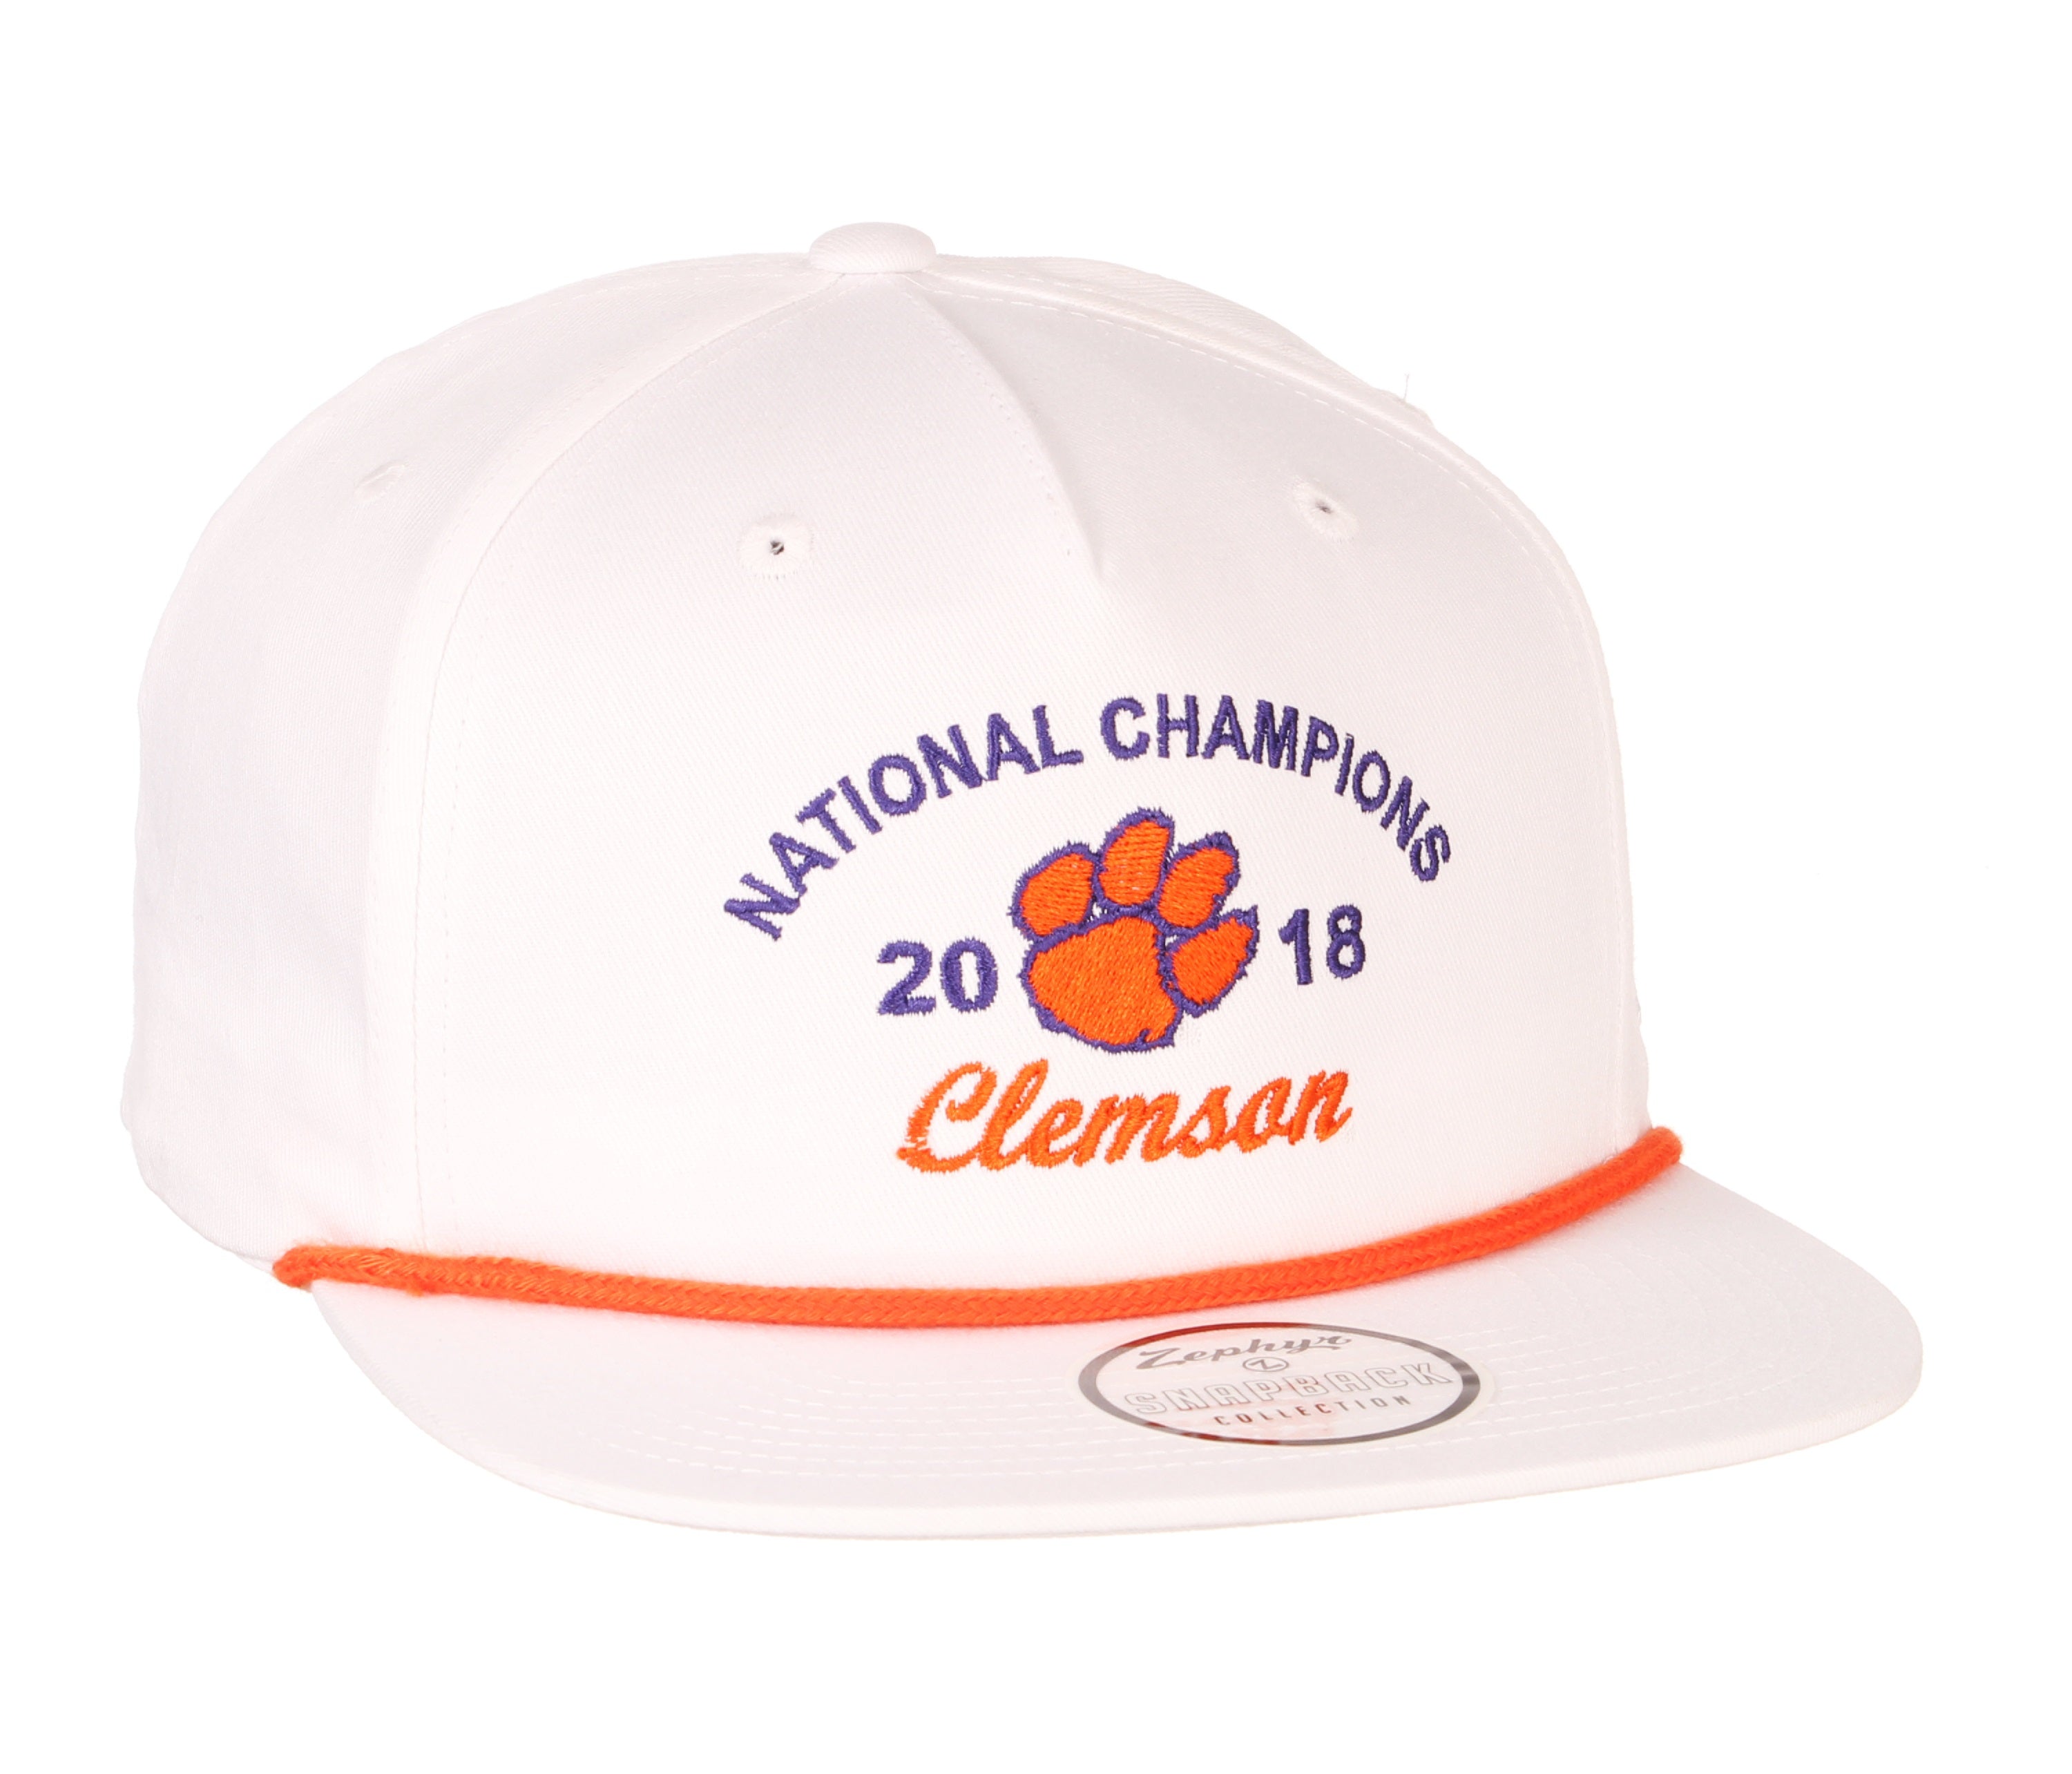 clemson 2018 national championship hat